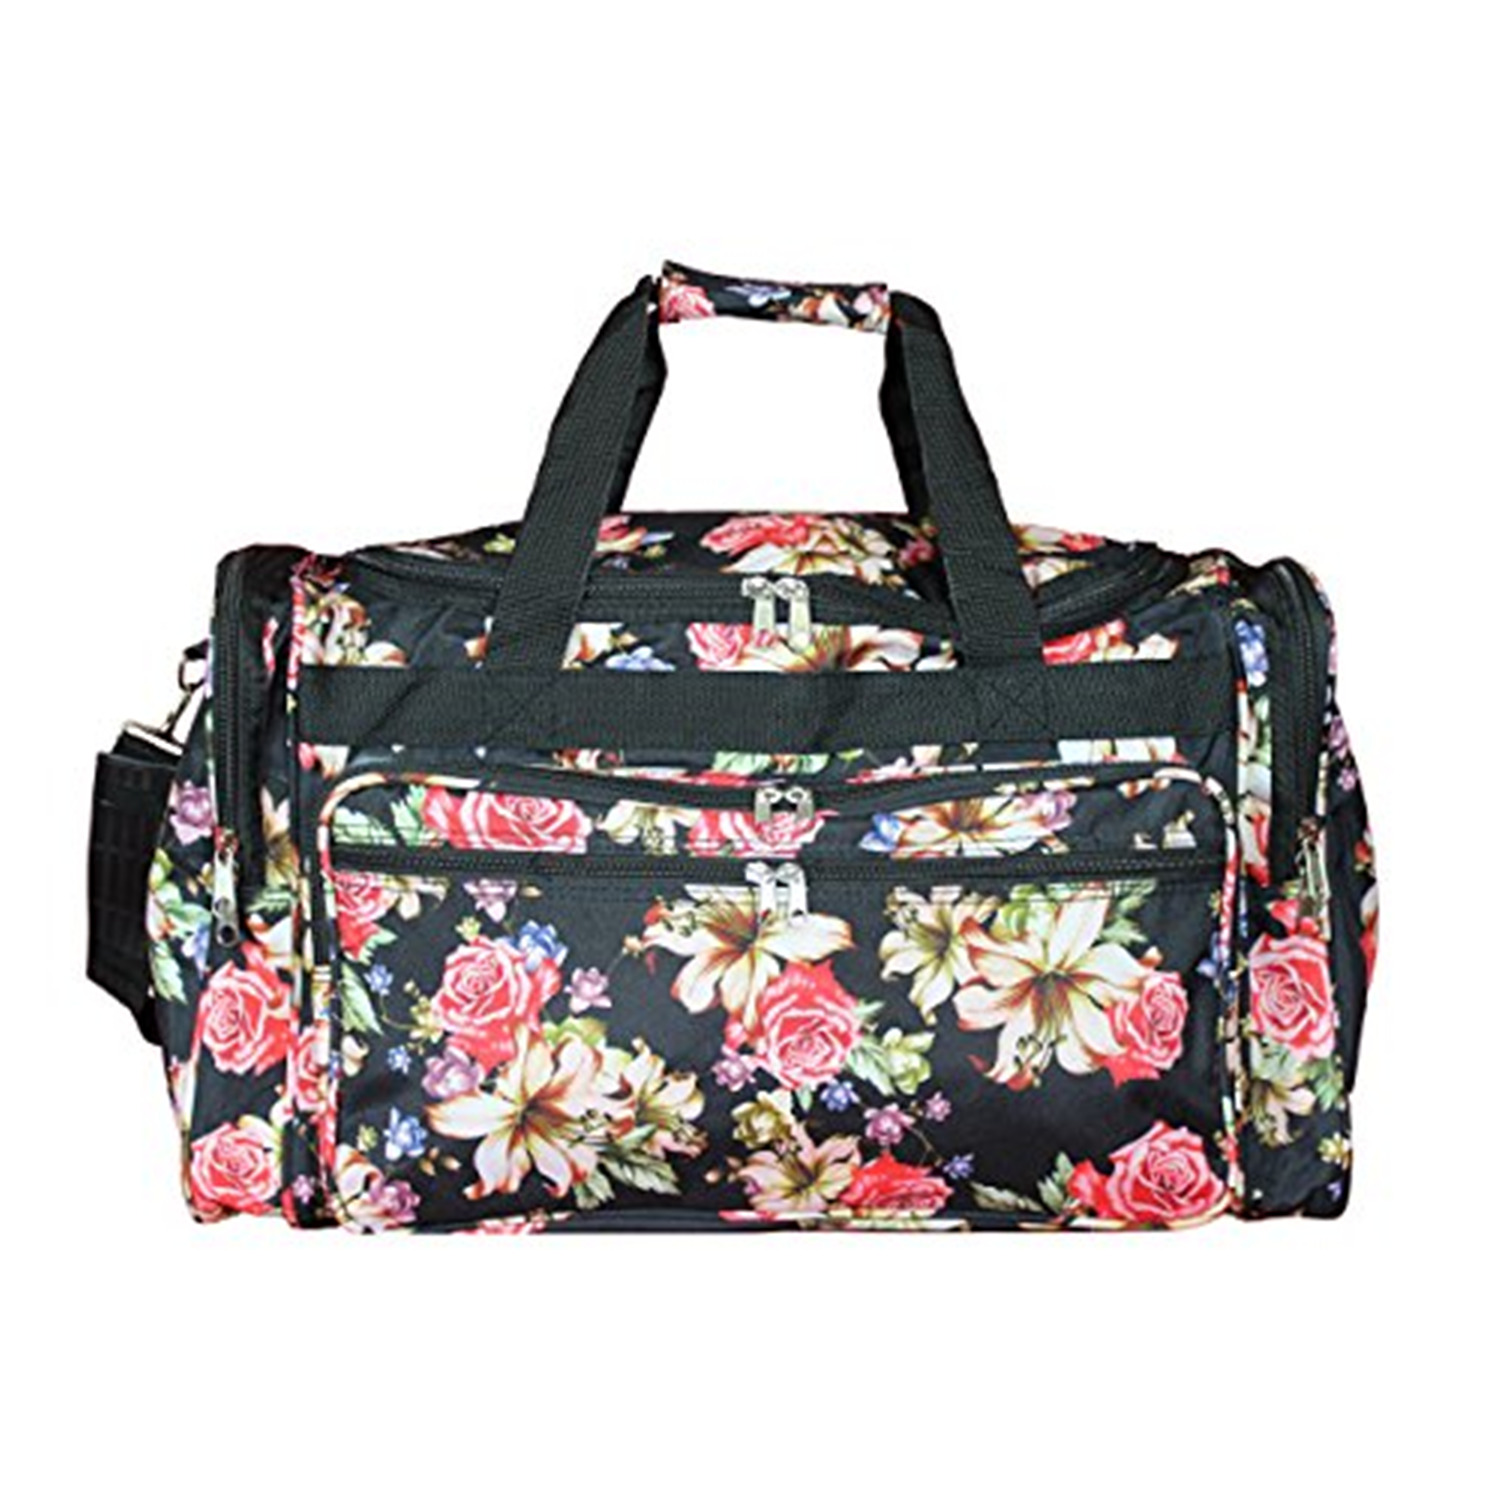 World Traveler 22-inch Travel Duffel Bag - Rose Lily - image 1 of 4